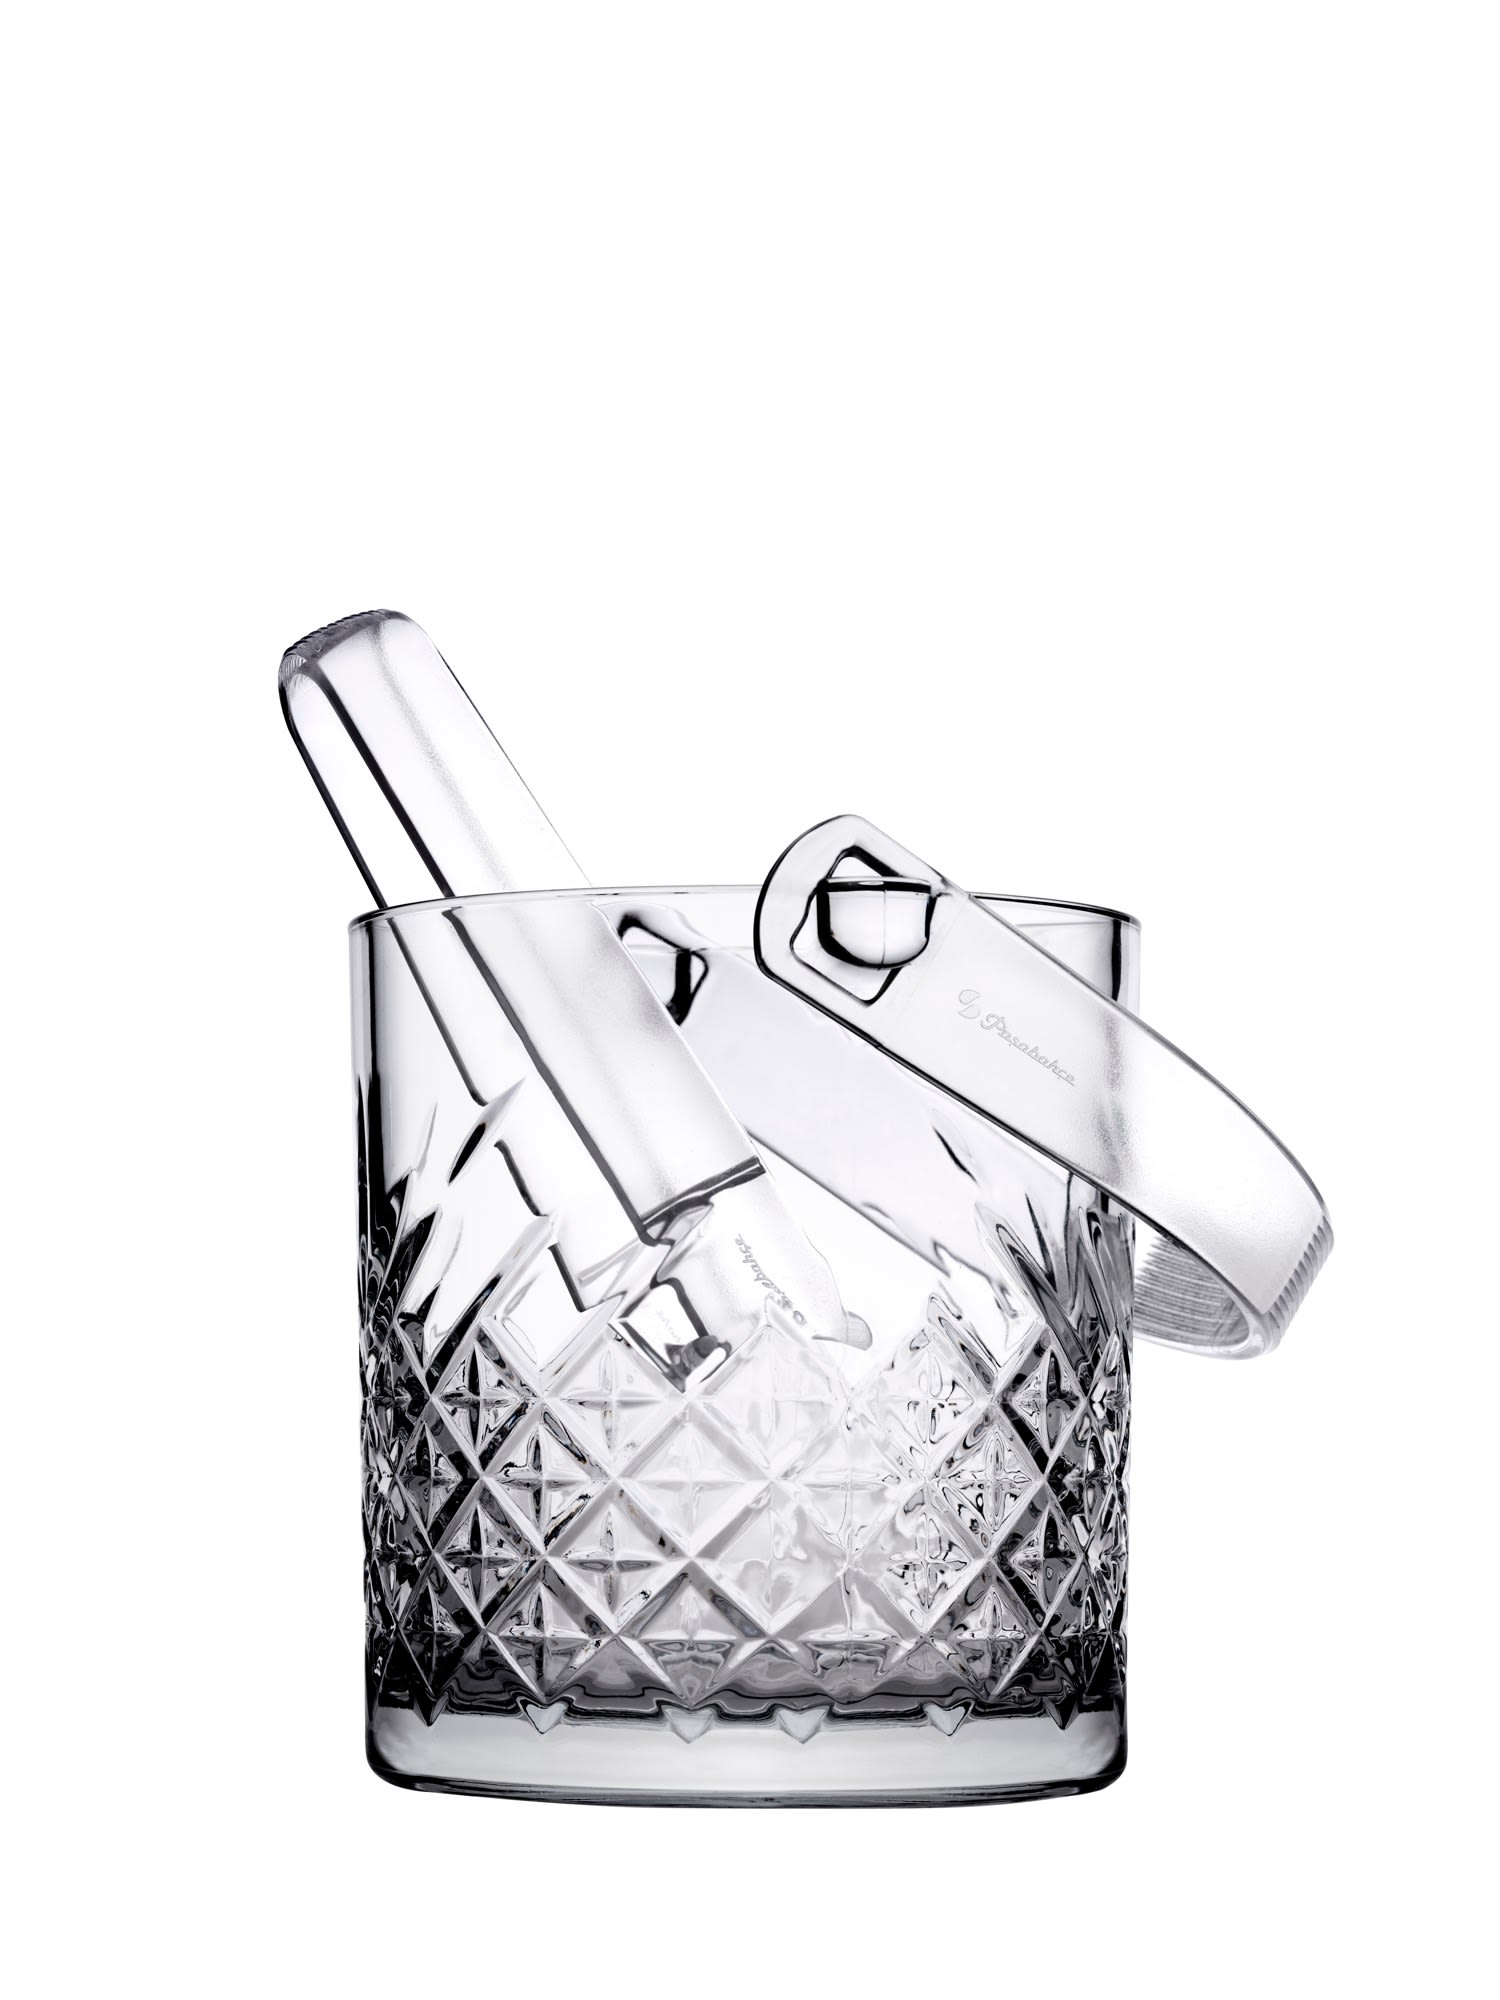 En elegant isspand fra Pasabahce Timeless-serien, perfekt til at holde dine drikkevarer kolde